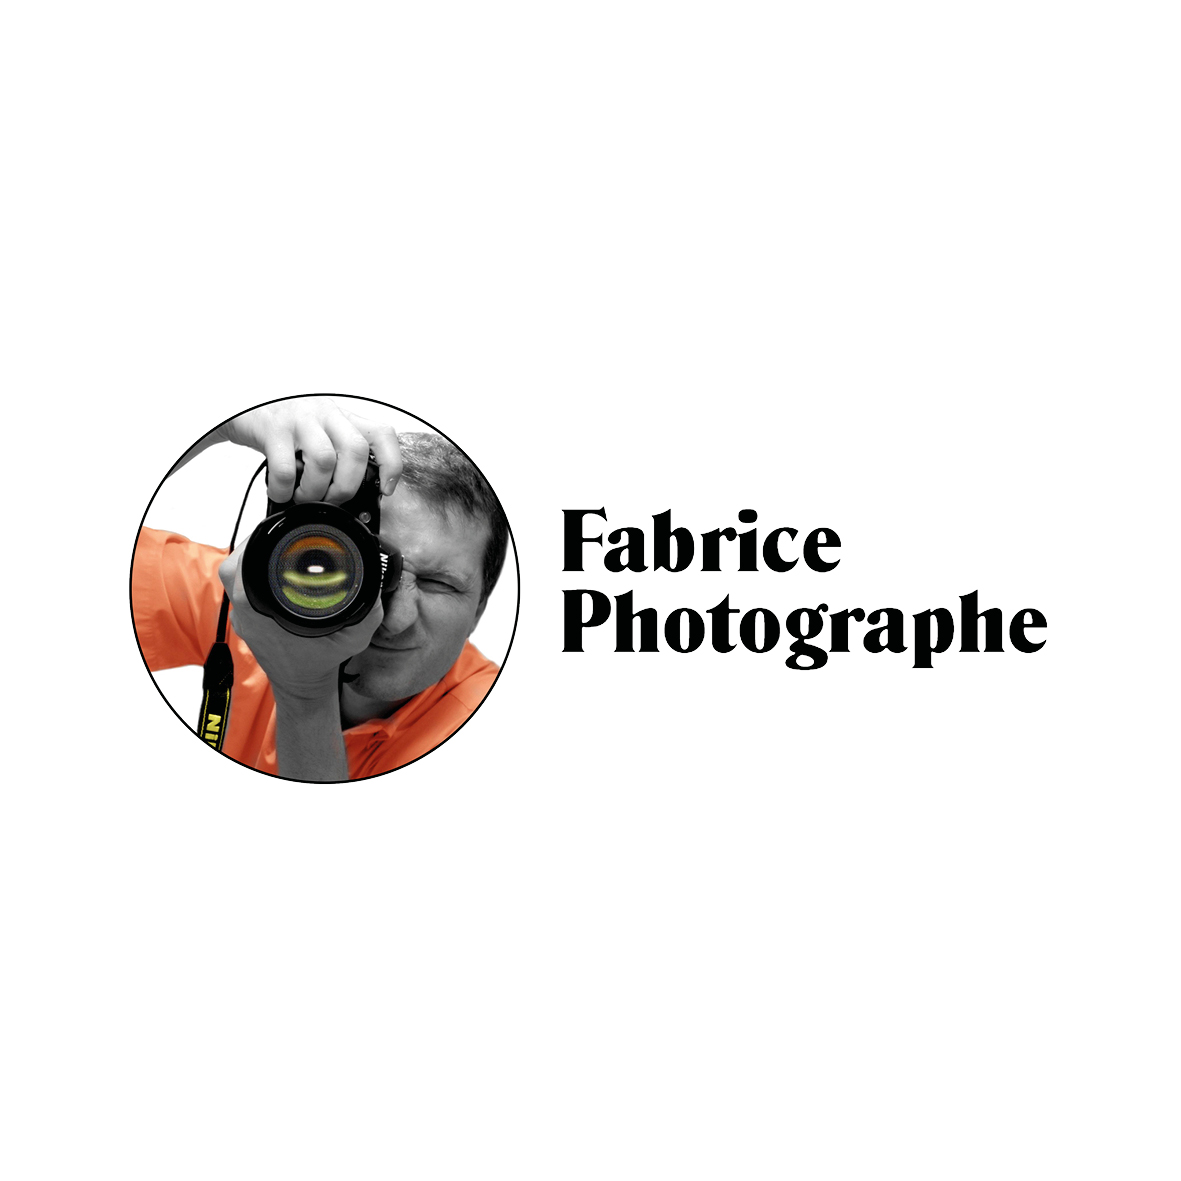 Fabrice photographe